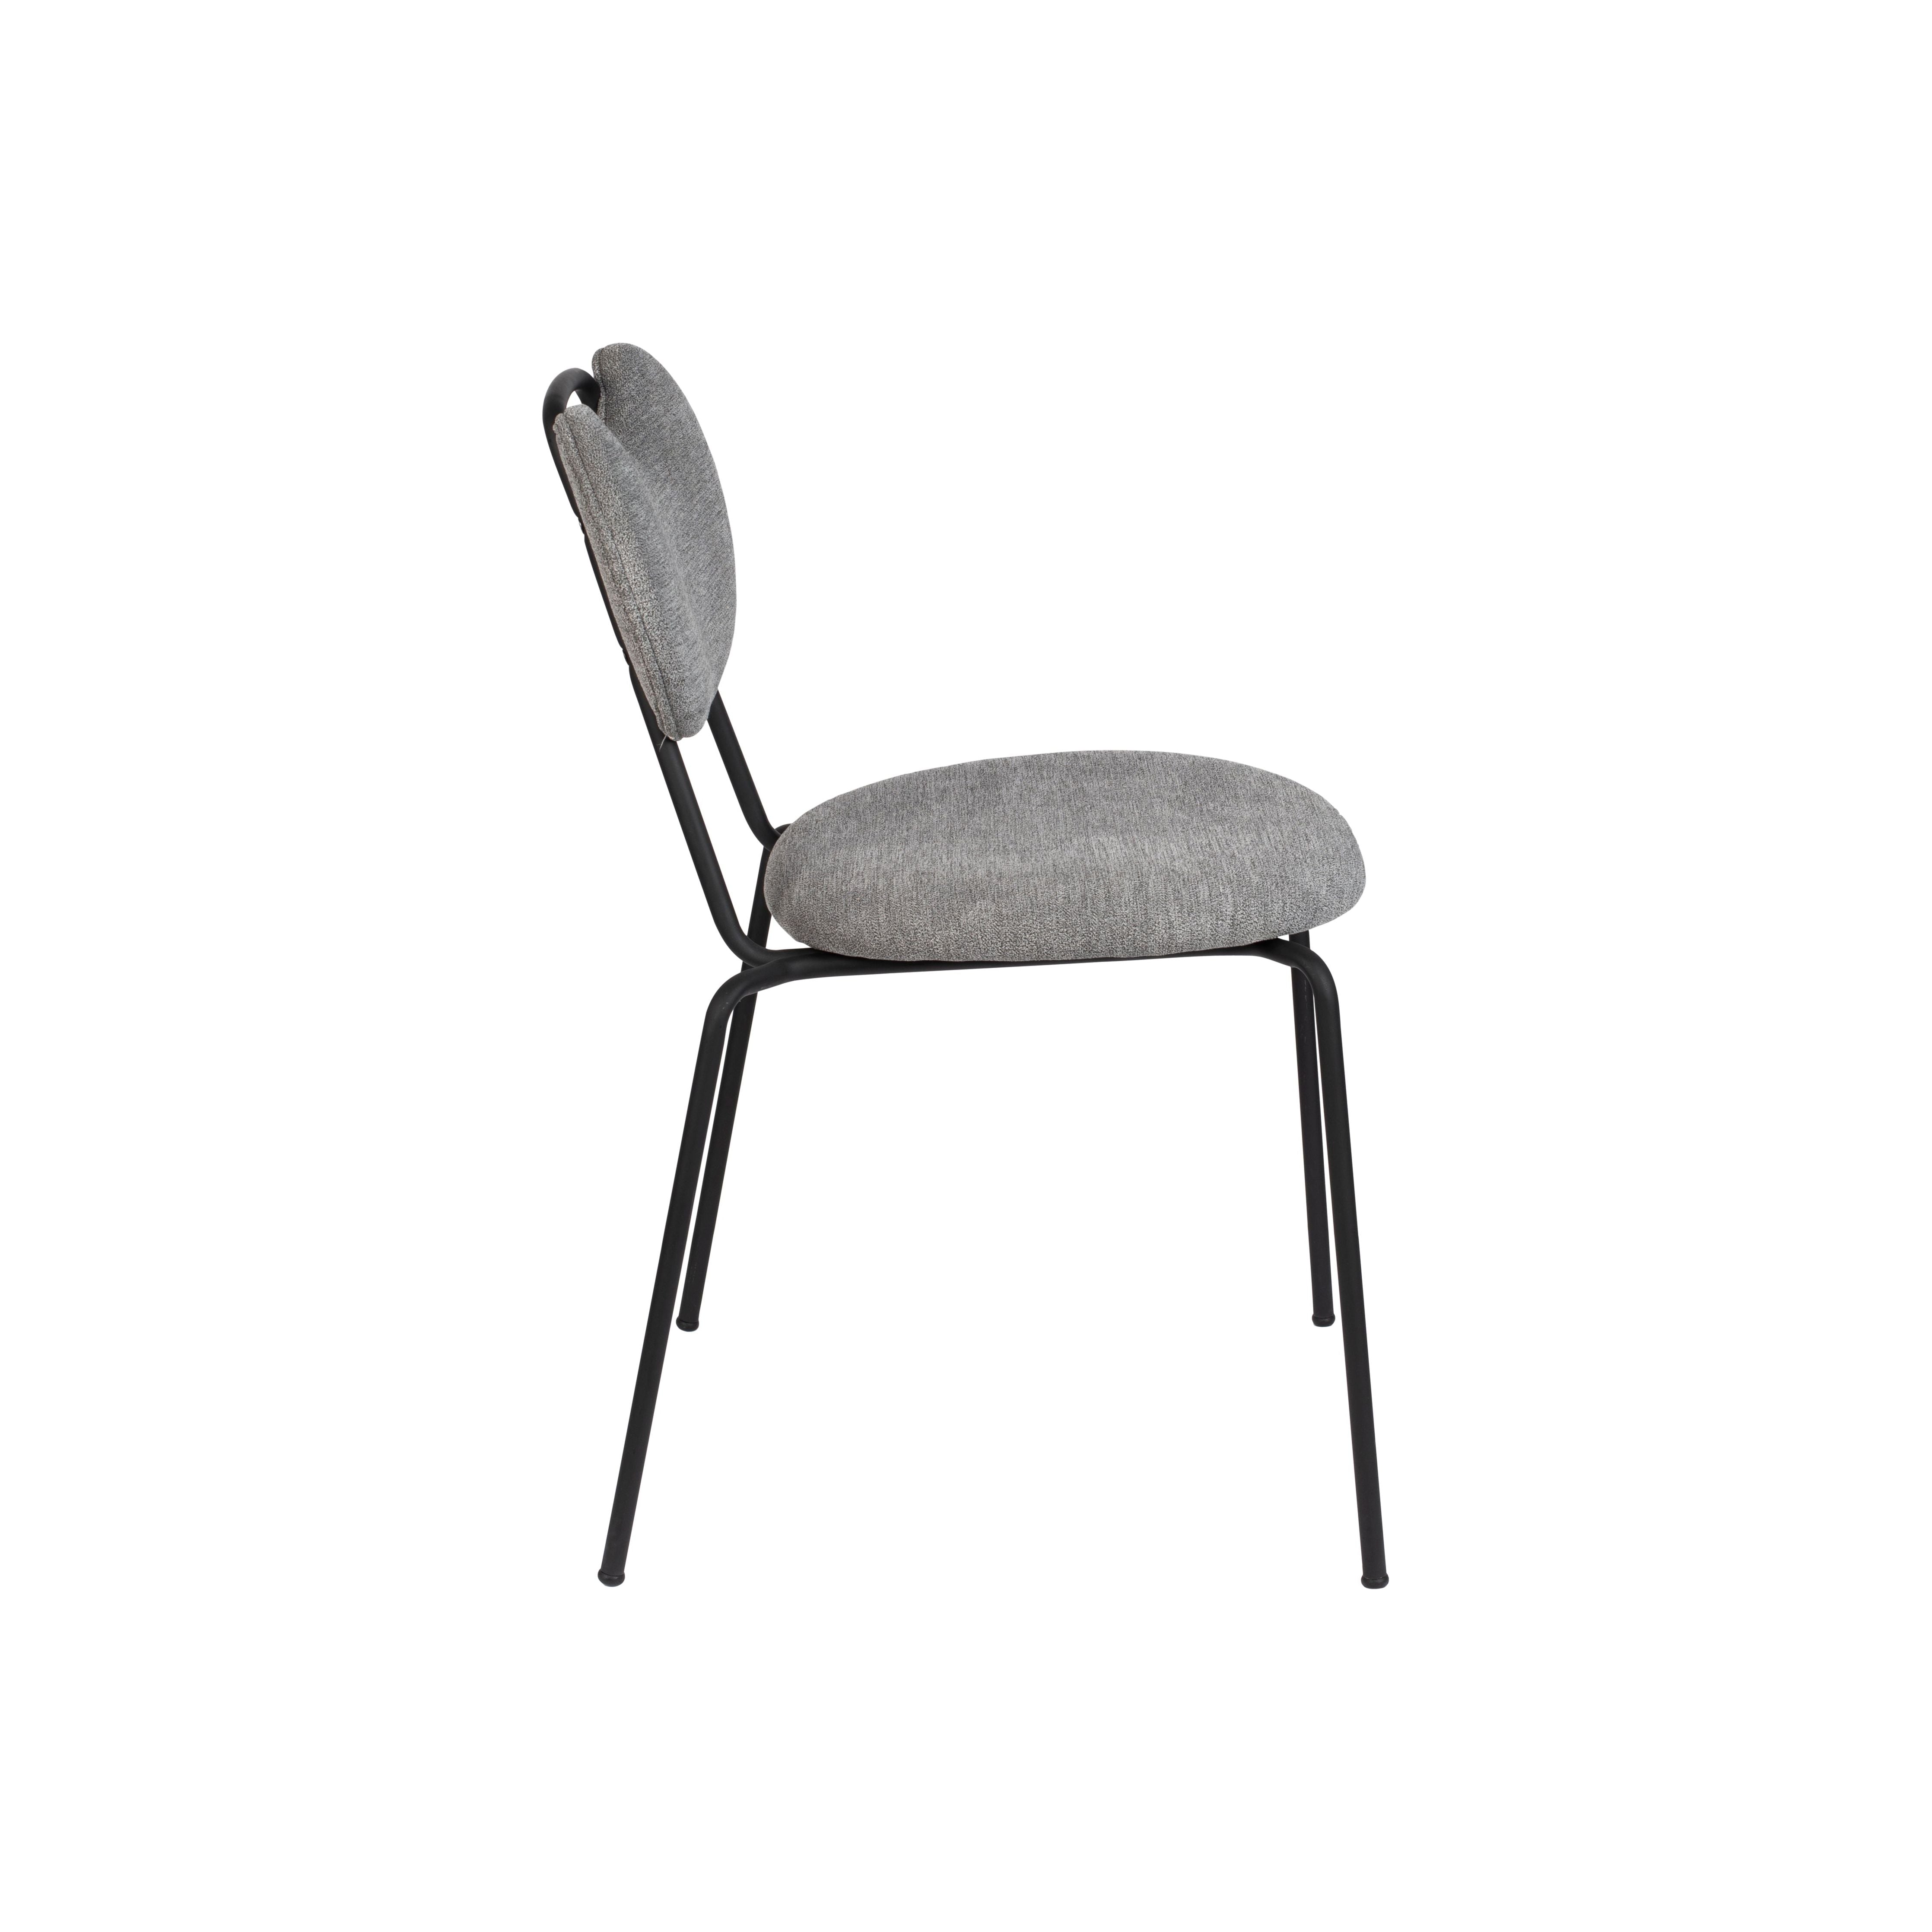 Chair aspen grey